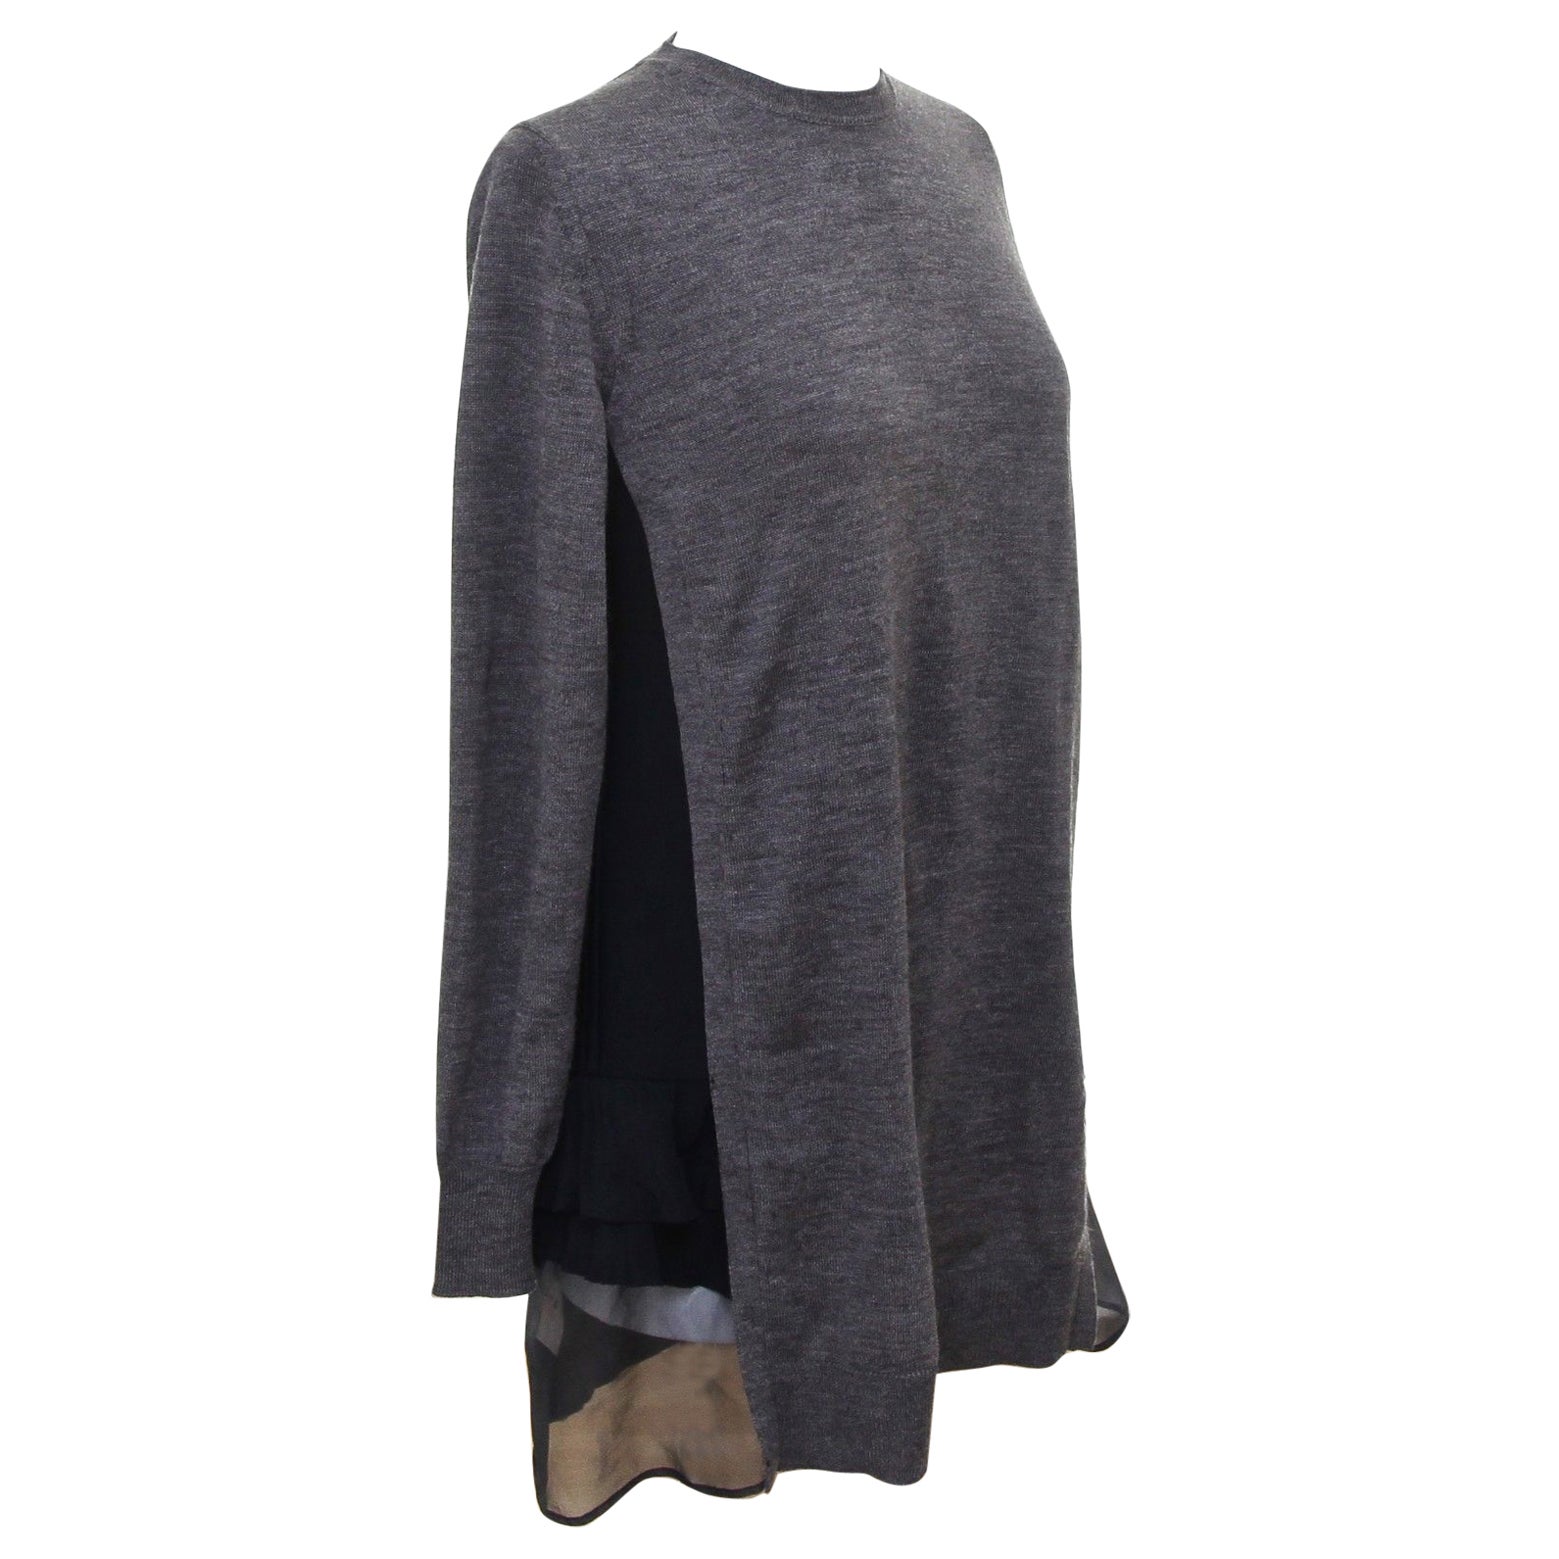 MIU MIU Top Sweater Knit Tunic Wool Grey Navy Silk Long Sleeve Sz 36